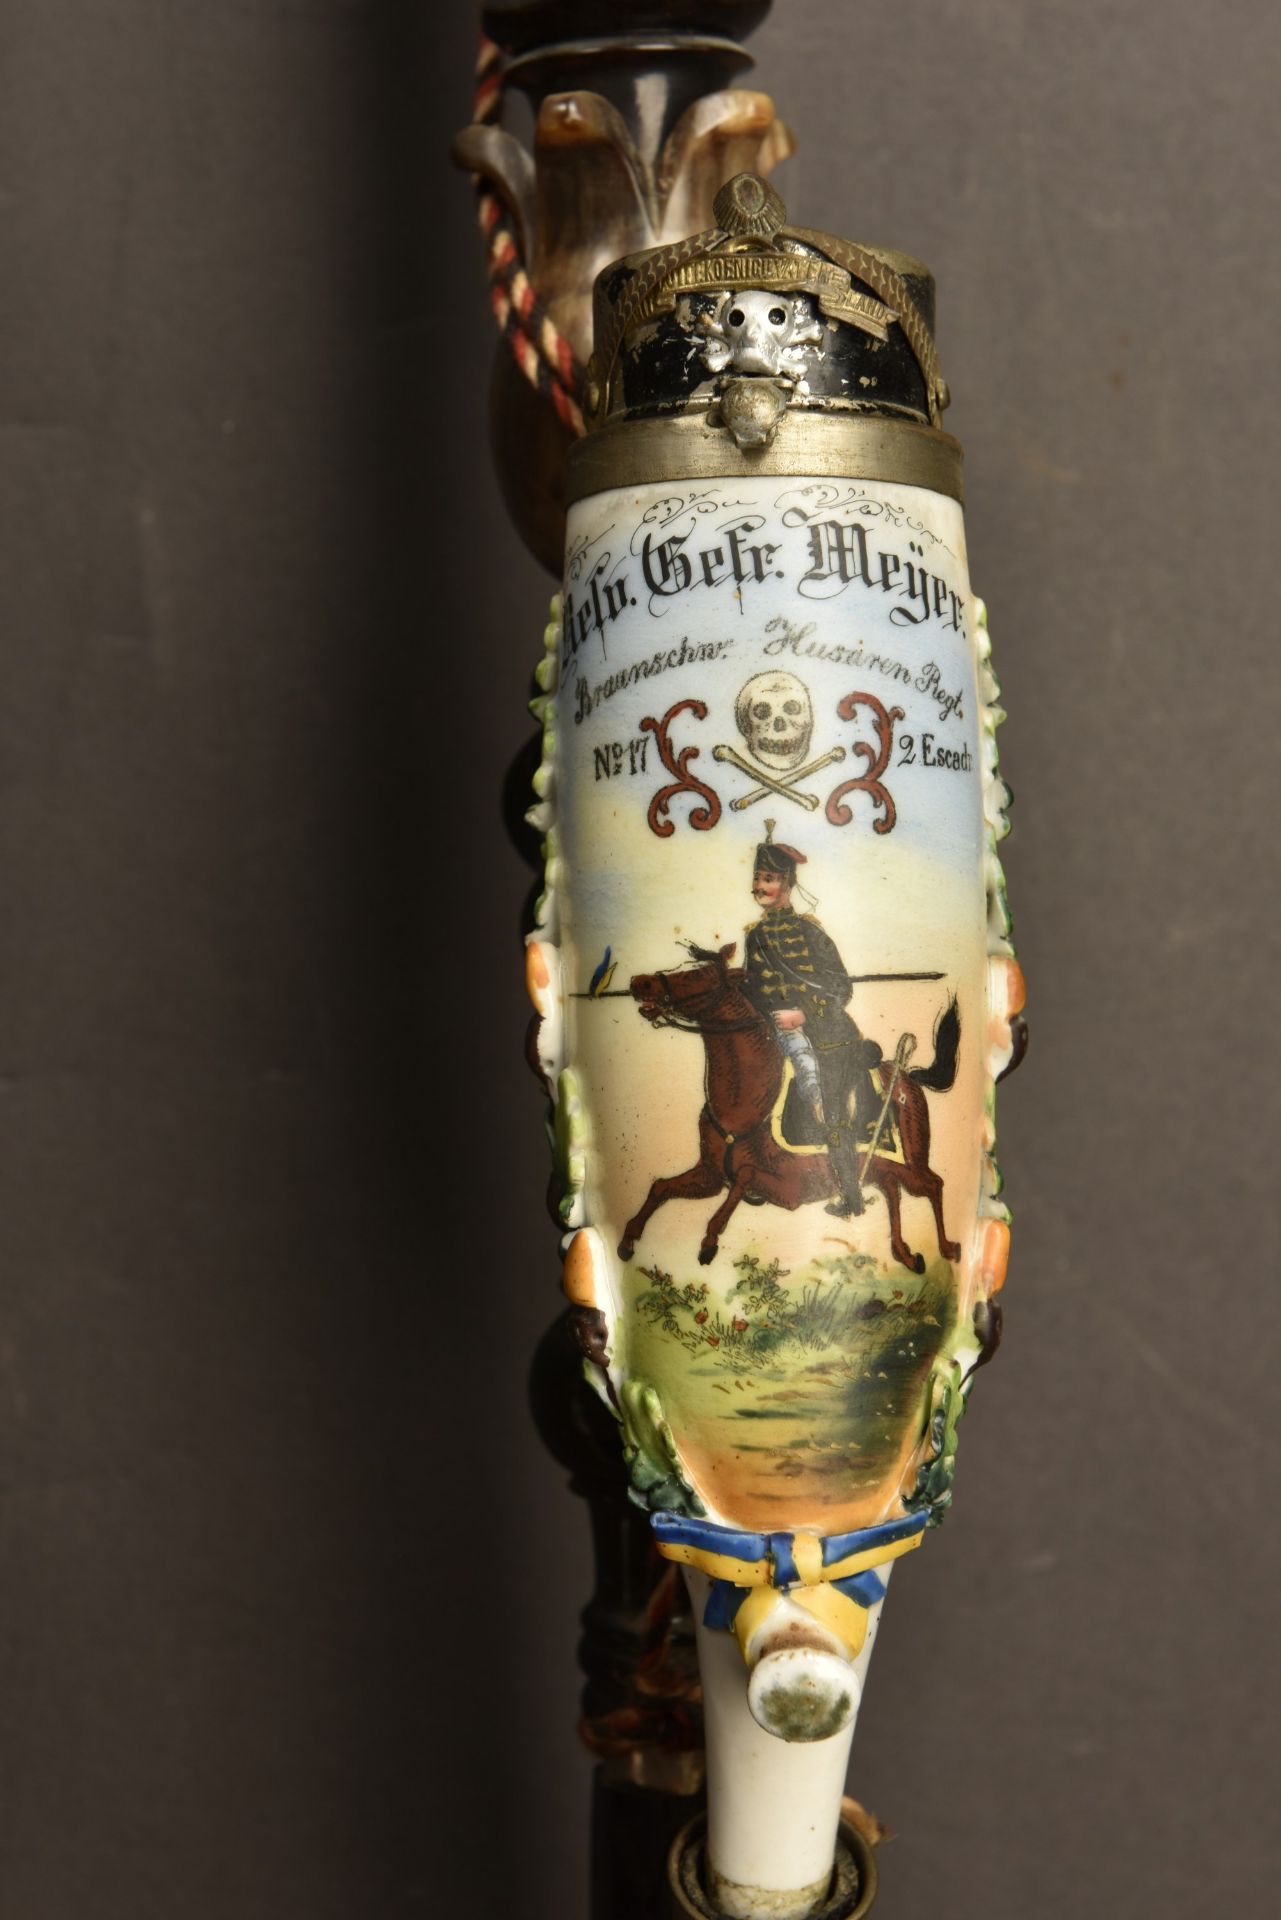 Pipe de reserviste du 17eme Hussards de Brunswick. Brunswick 17th hussars porcelan reservist pipe. B - Image 4 of 4